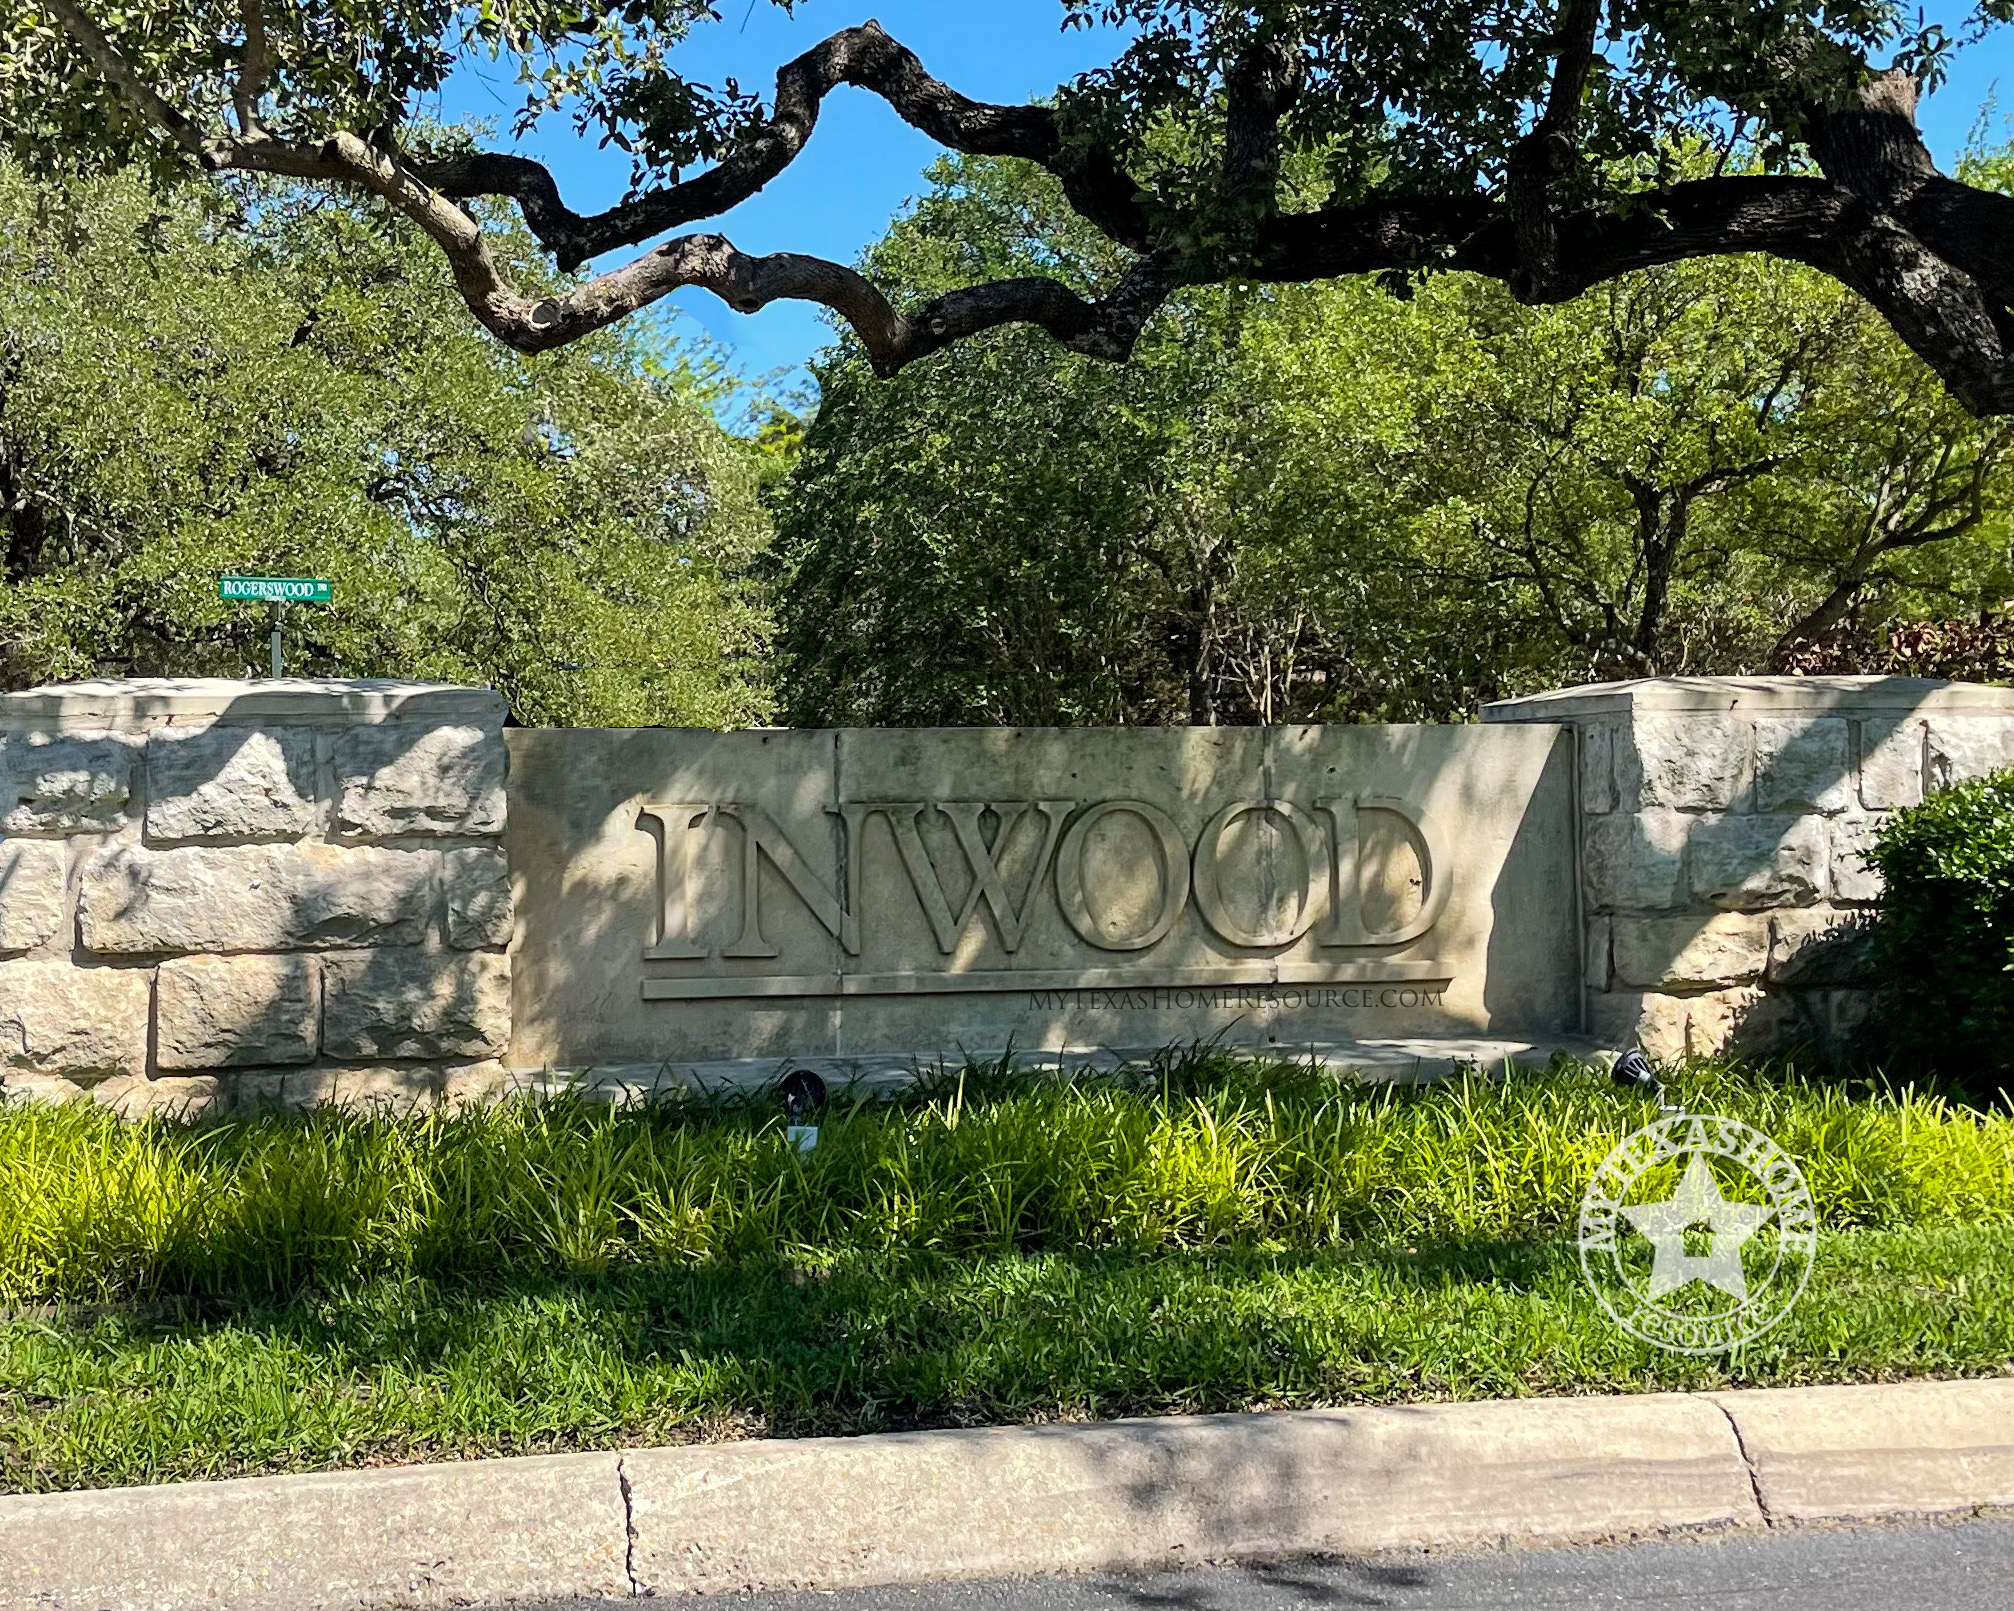 Inwood Community San Antonio, TX